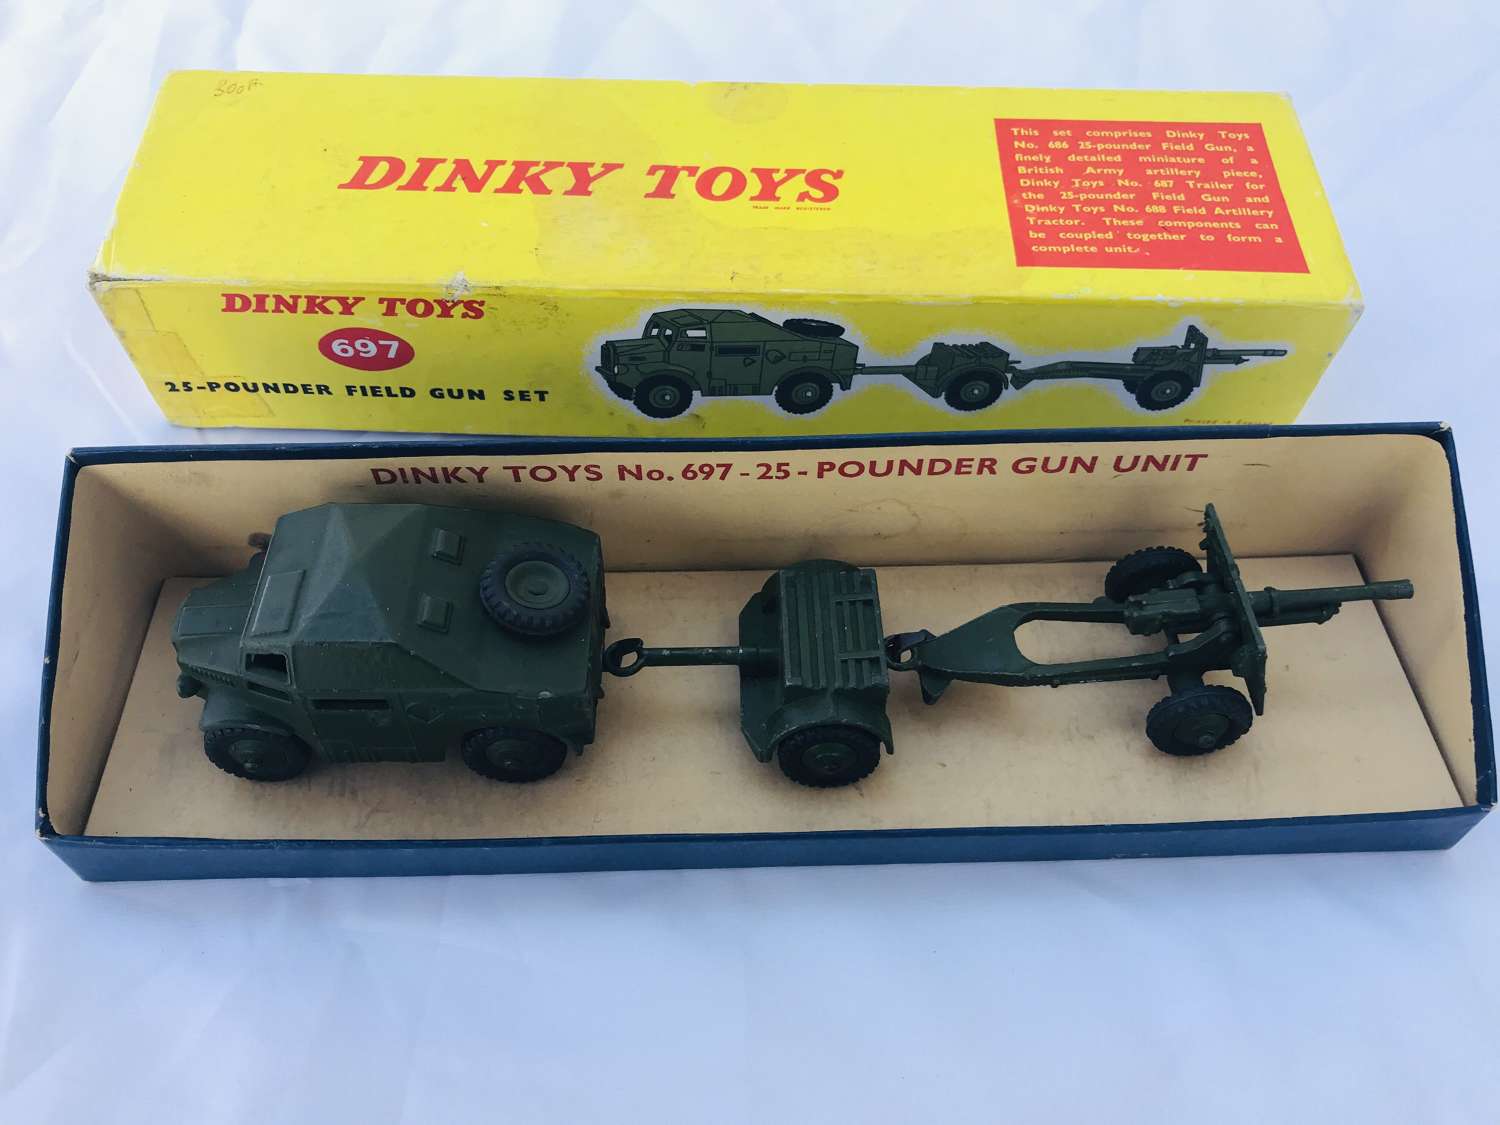 Dinky toys 25 pounder field gun set boxed